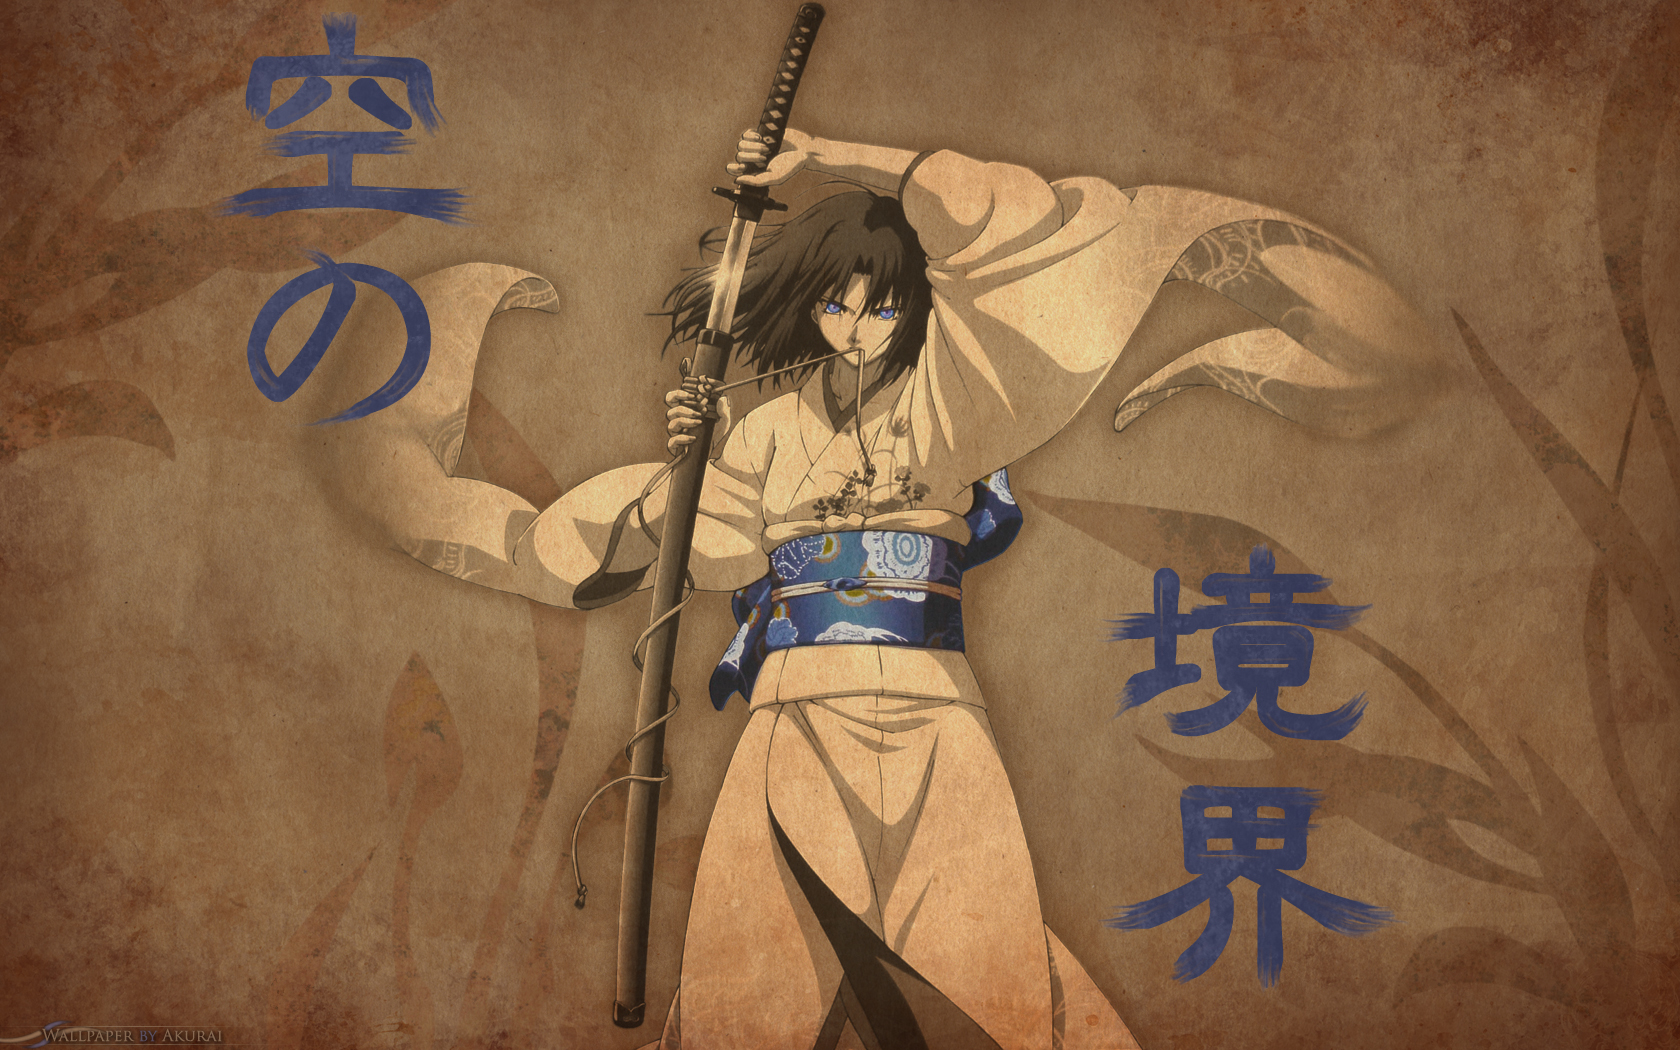 159968 descargar imagen animado, kara no kyōkai: fondos de pantalla y protectores de pantalla gratis